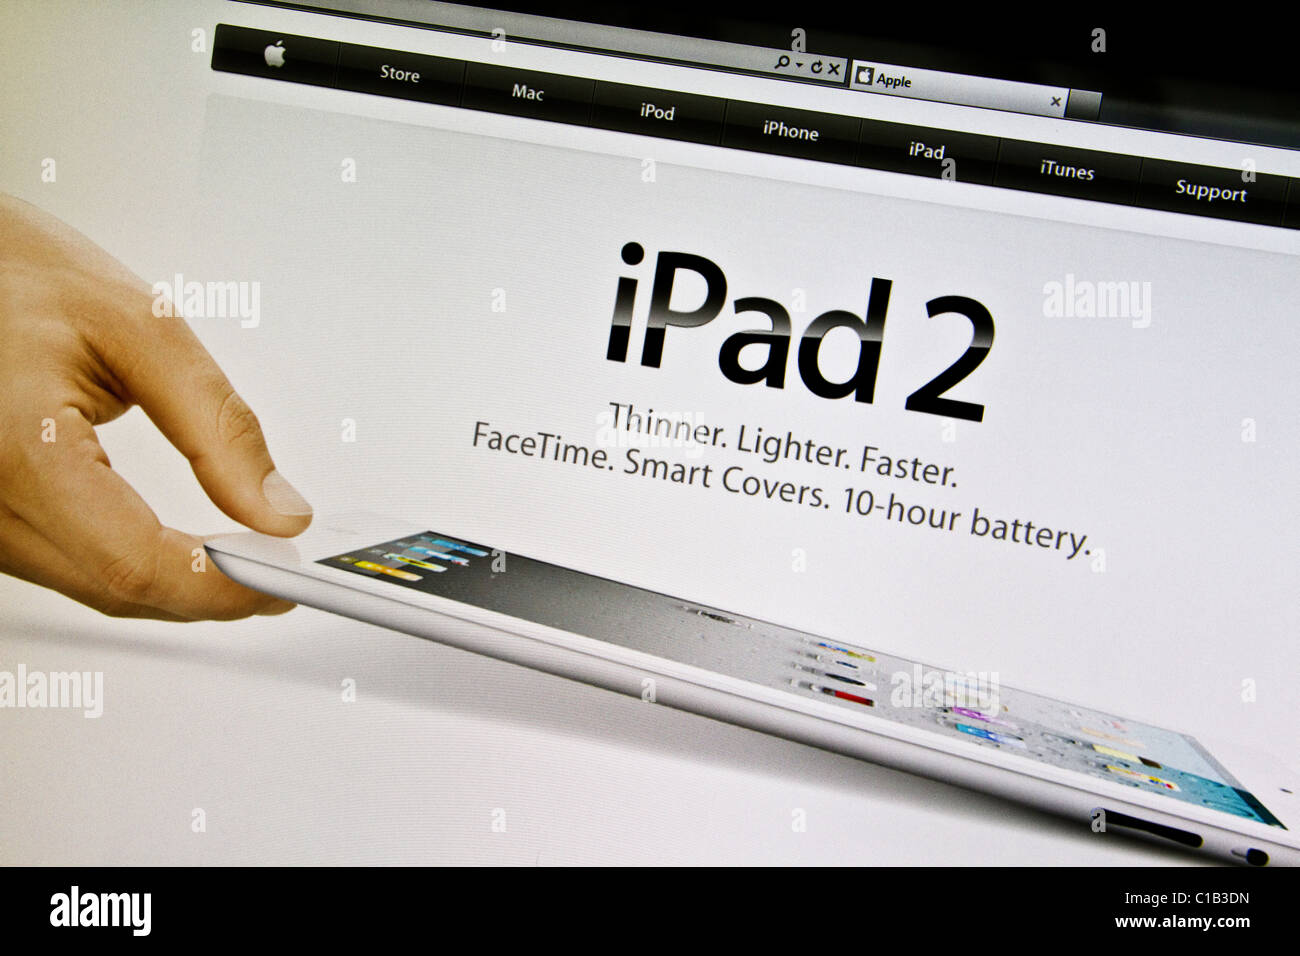 iPad 2 on website displayed on computer screen Stock Photo